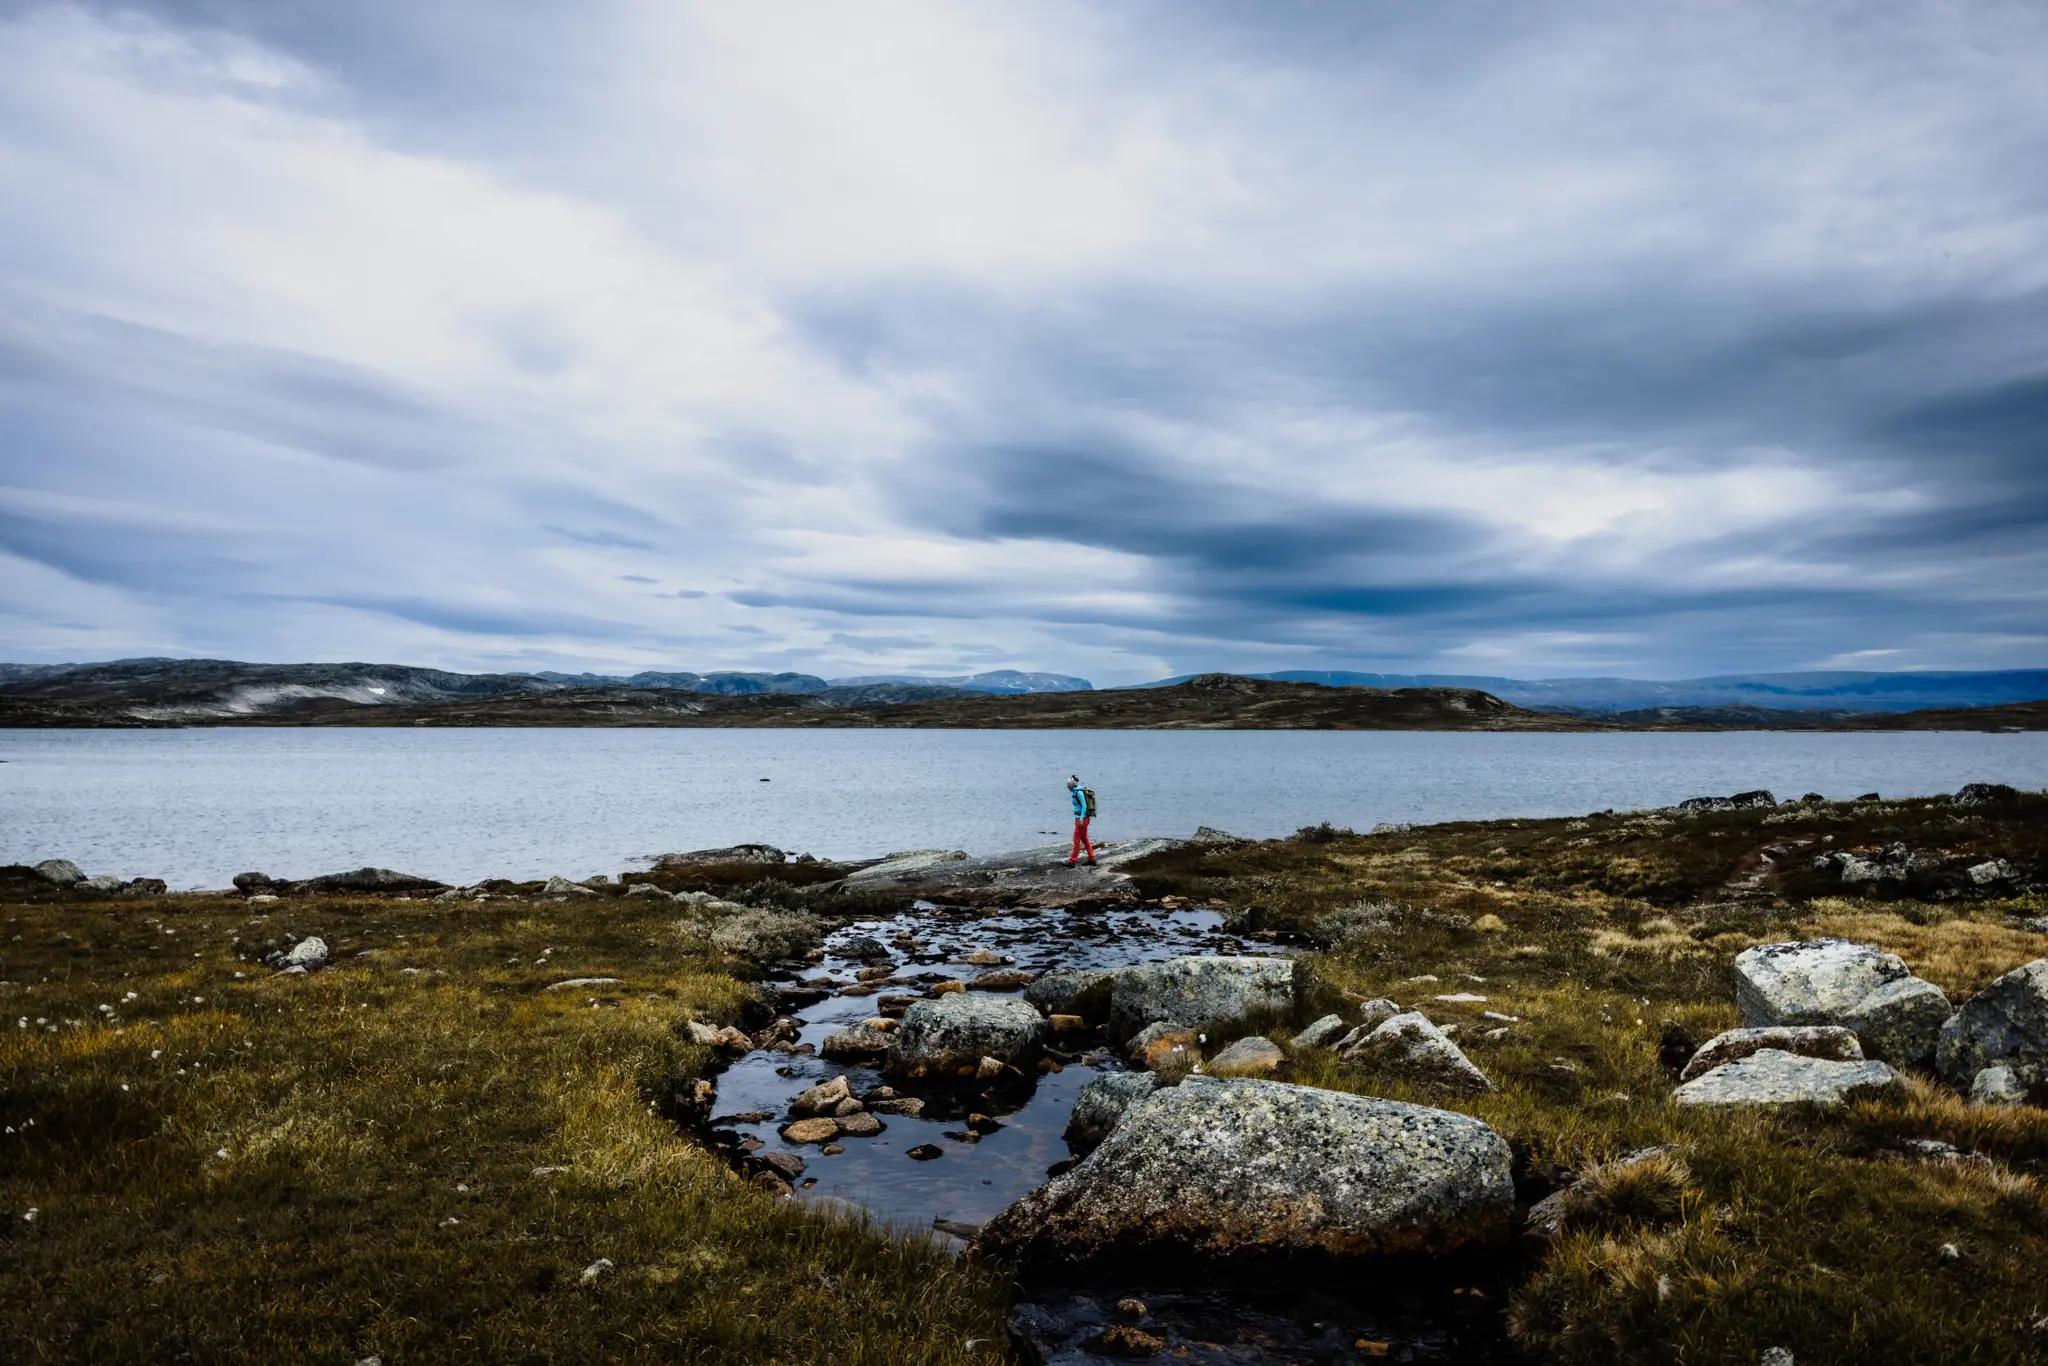 Hardangervidda: big scenery, small human.